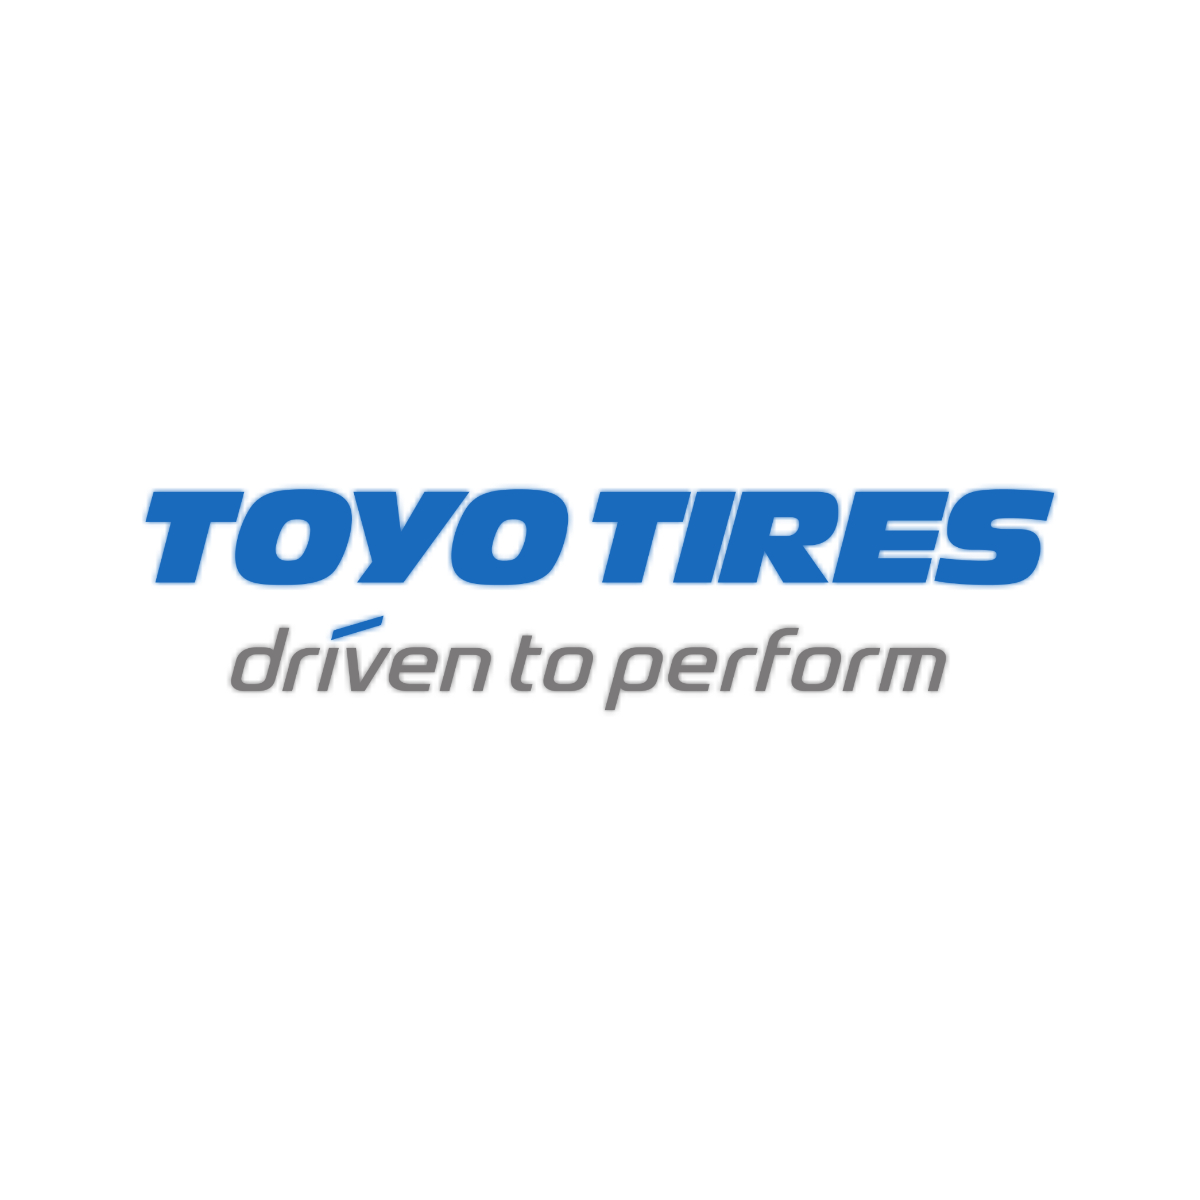 Toyo Tires Merrick Tire Center Queens, NY